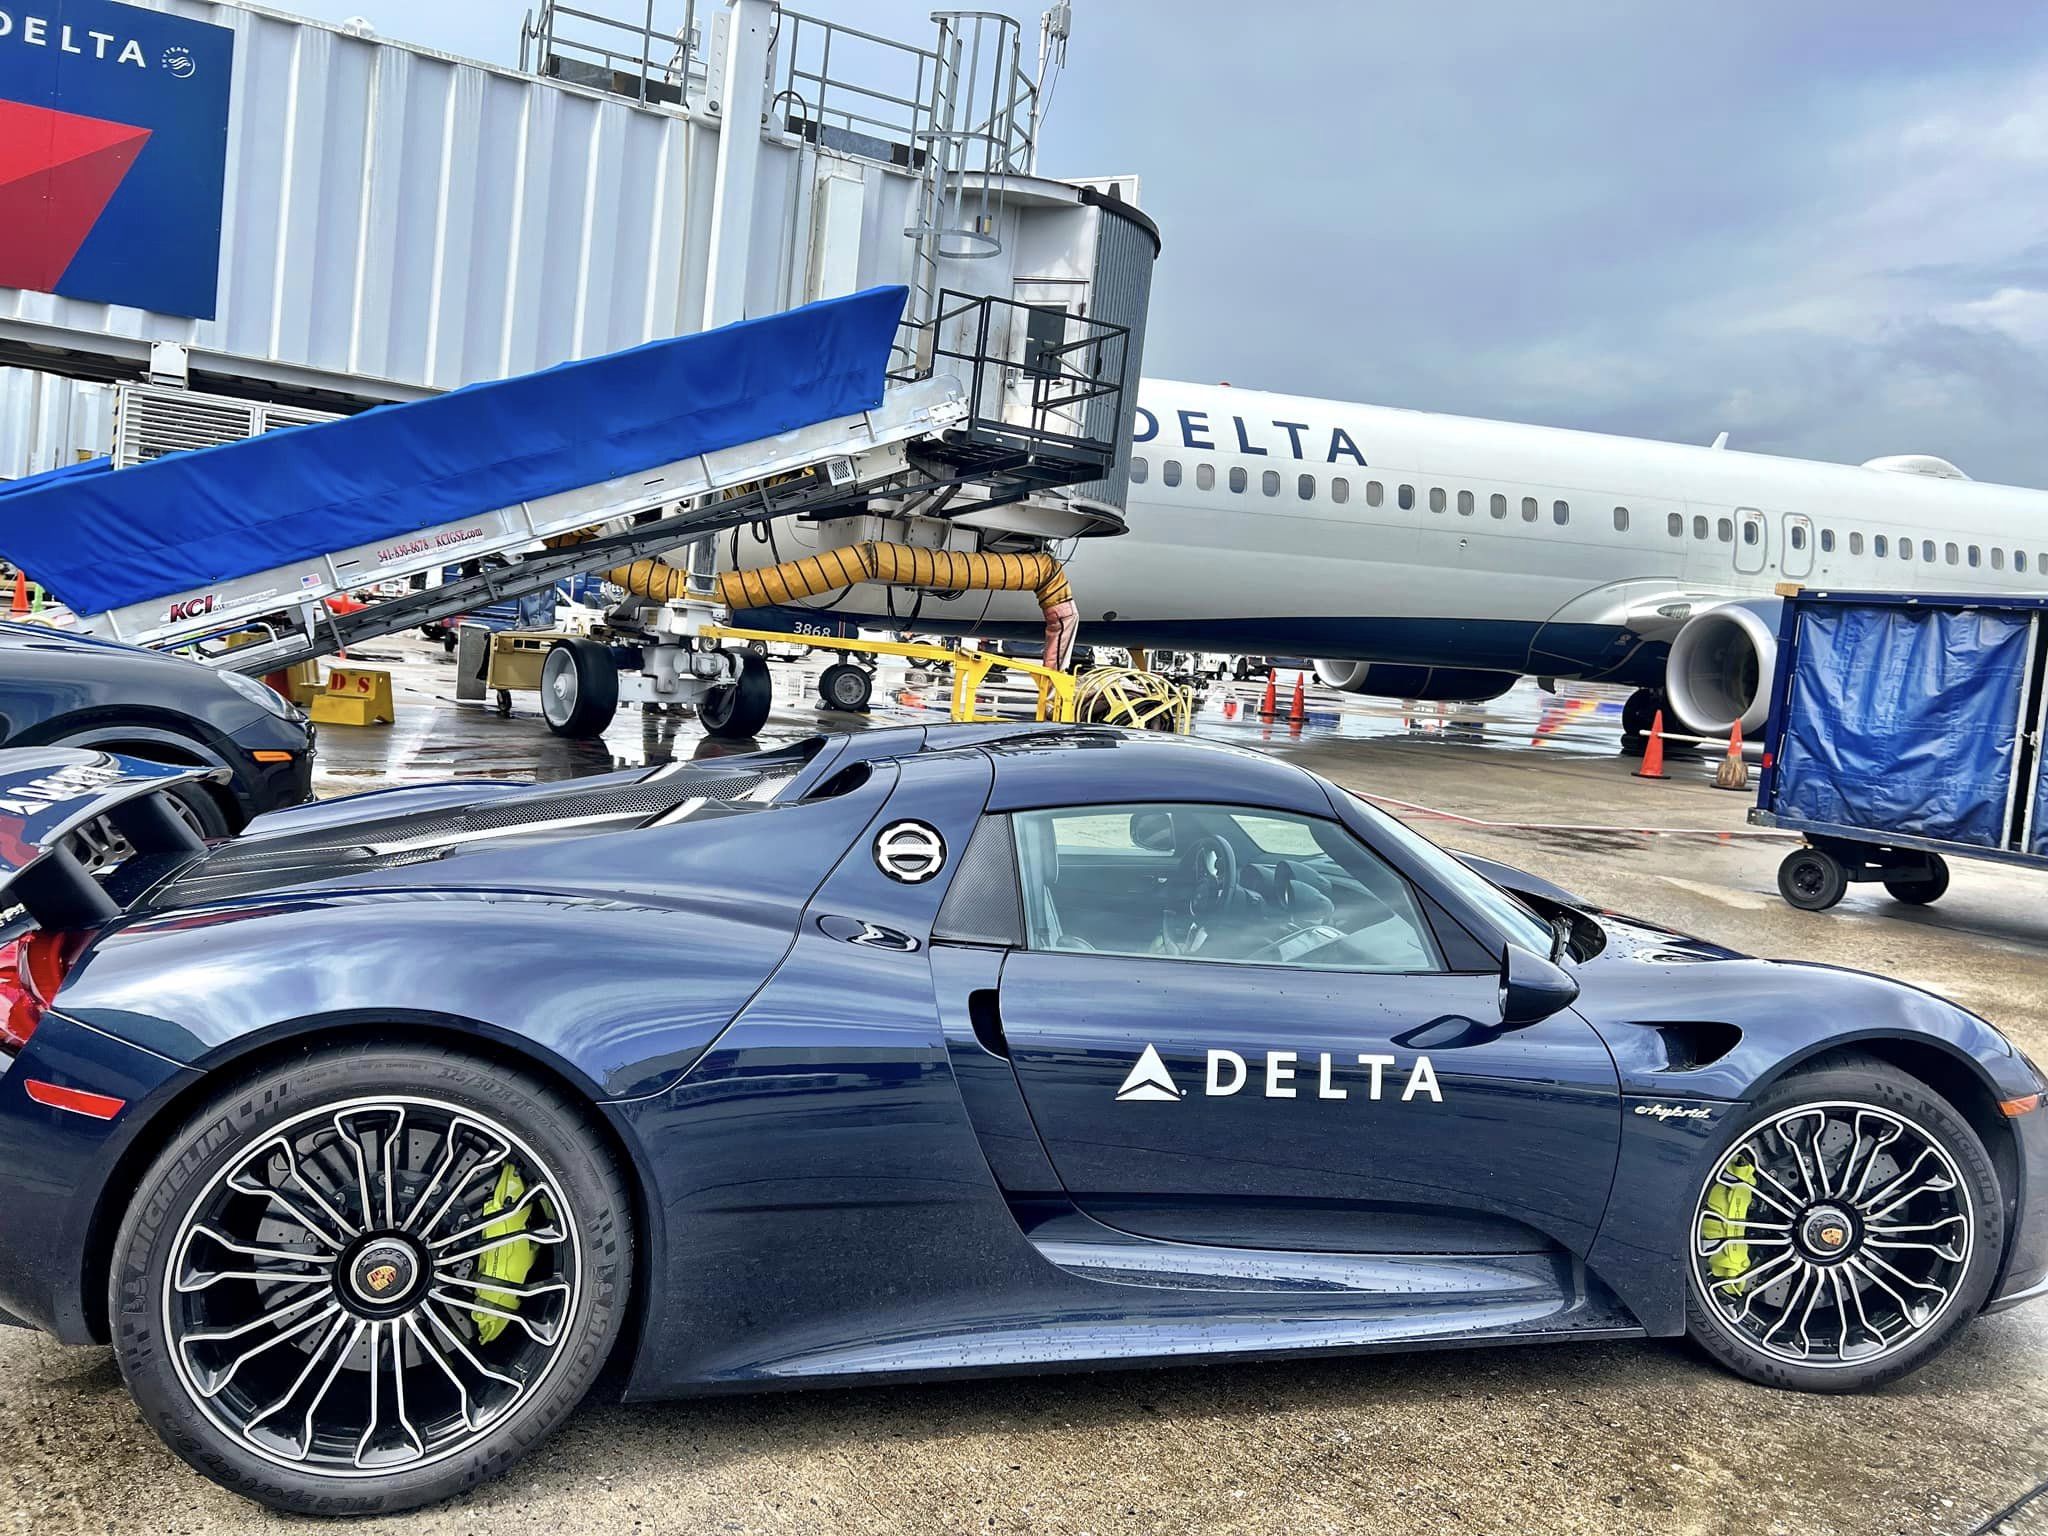 a blue sports car parked next to a plane